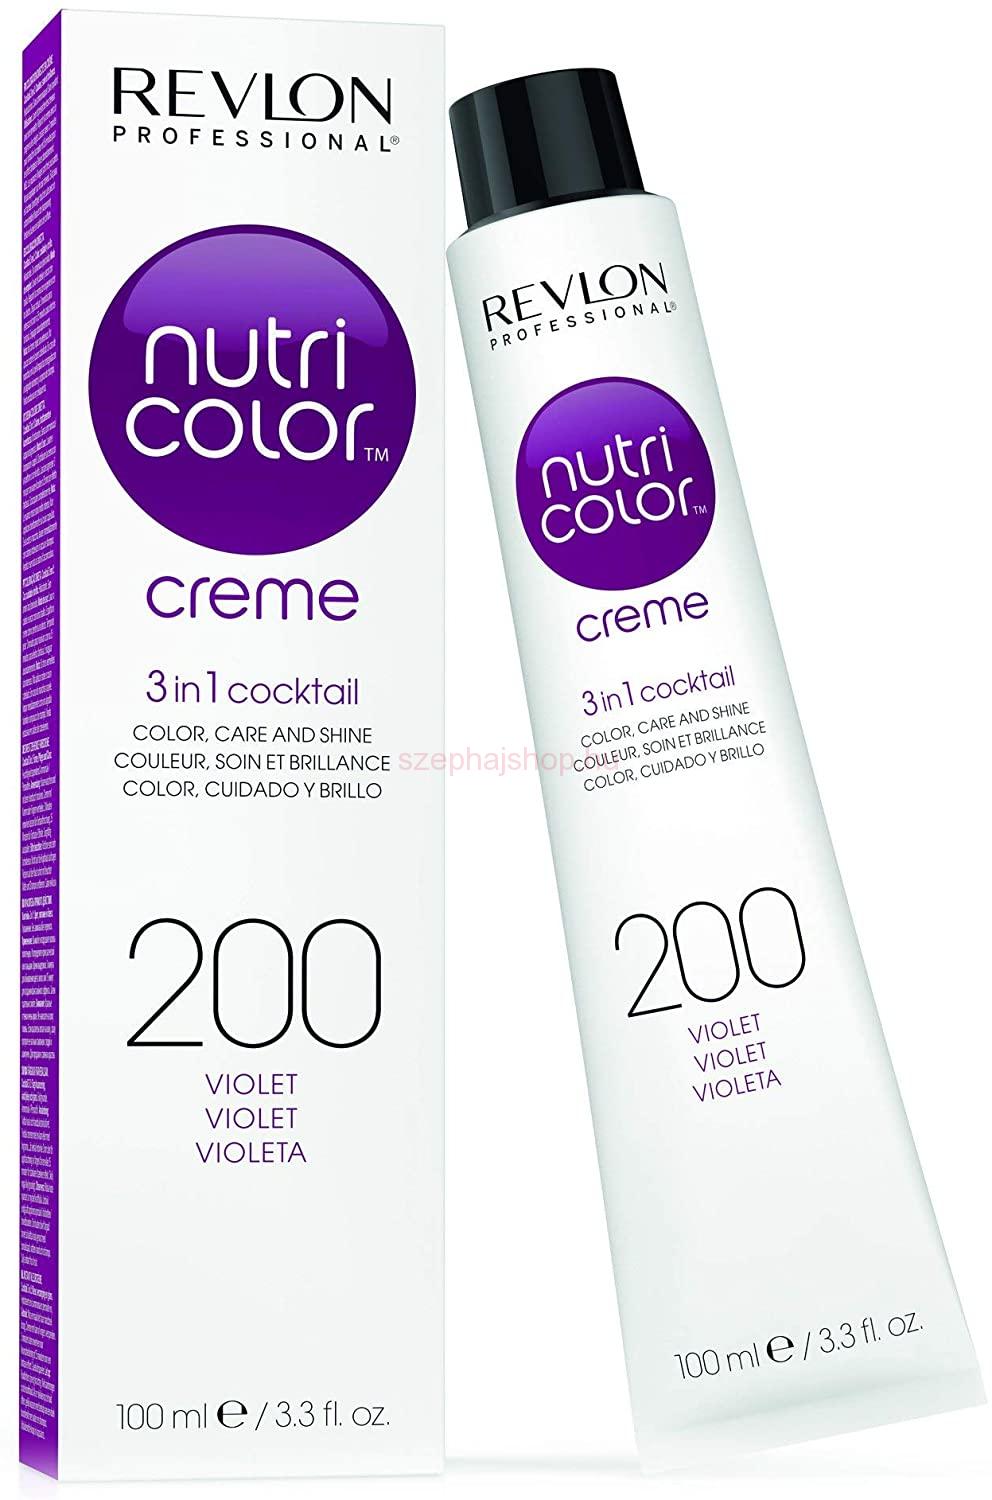 Revlon Nutri Color Creme 200 Violet 100 ml